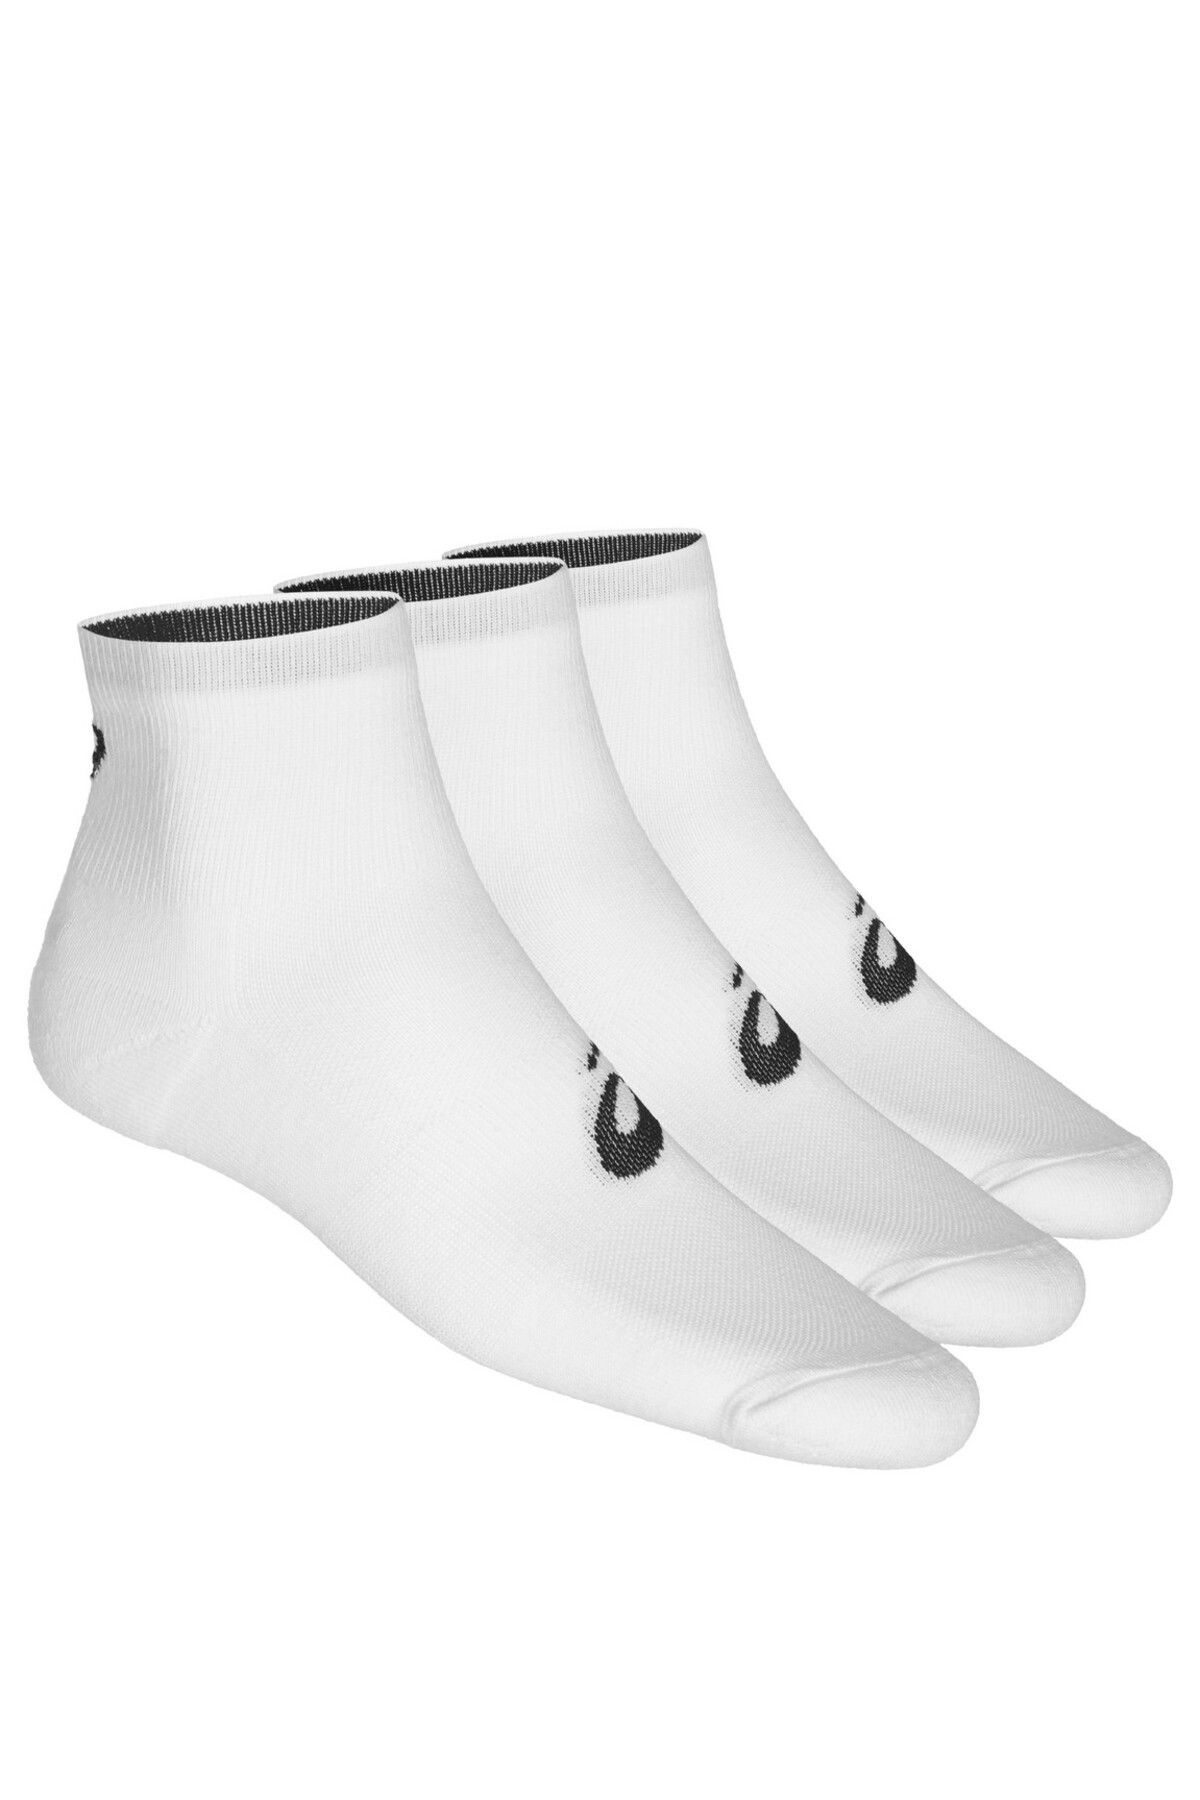 Asics 3ppk Quarter Unisex Beyaz Çorap 155205-0001 C-ASI155205A10-14